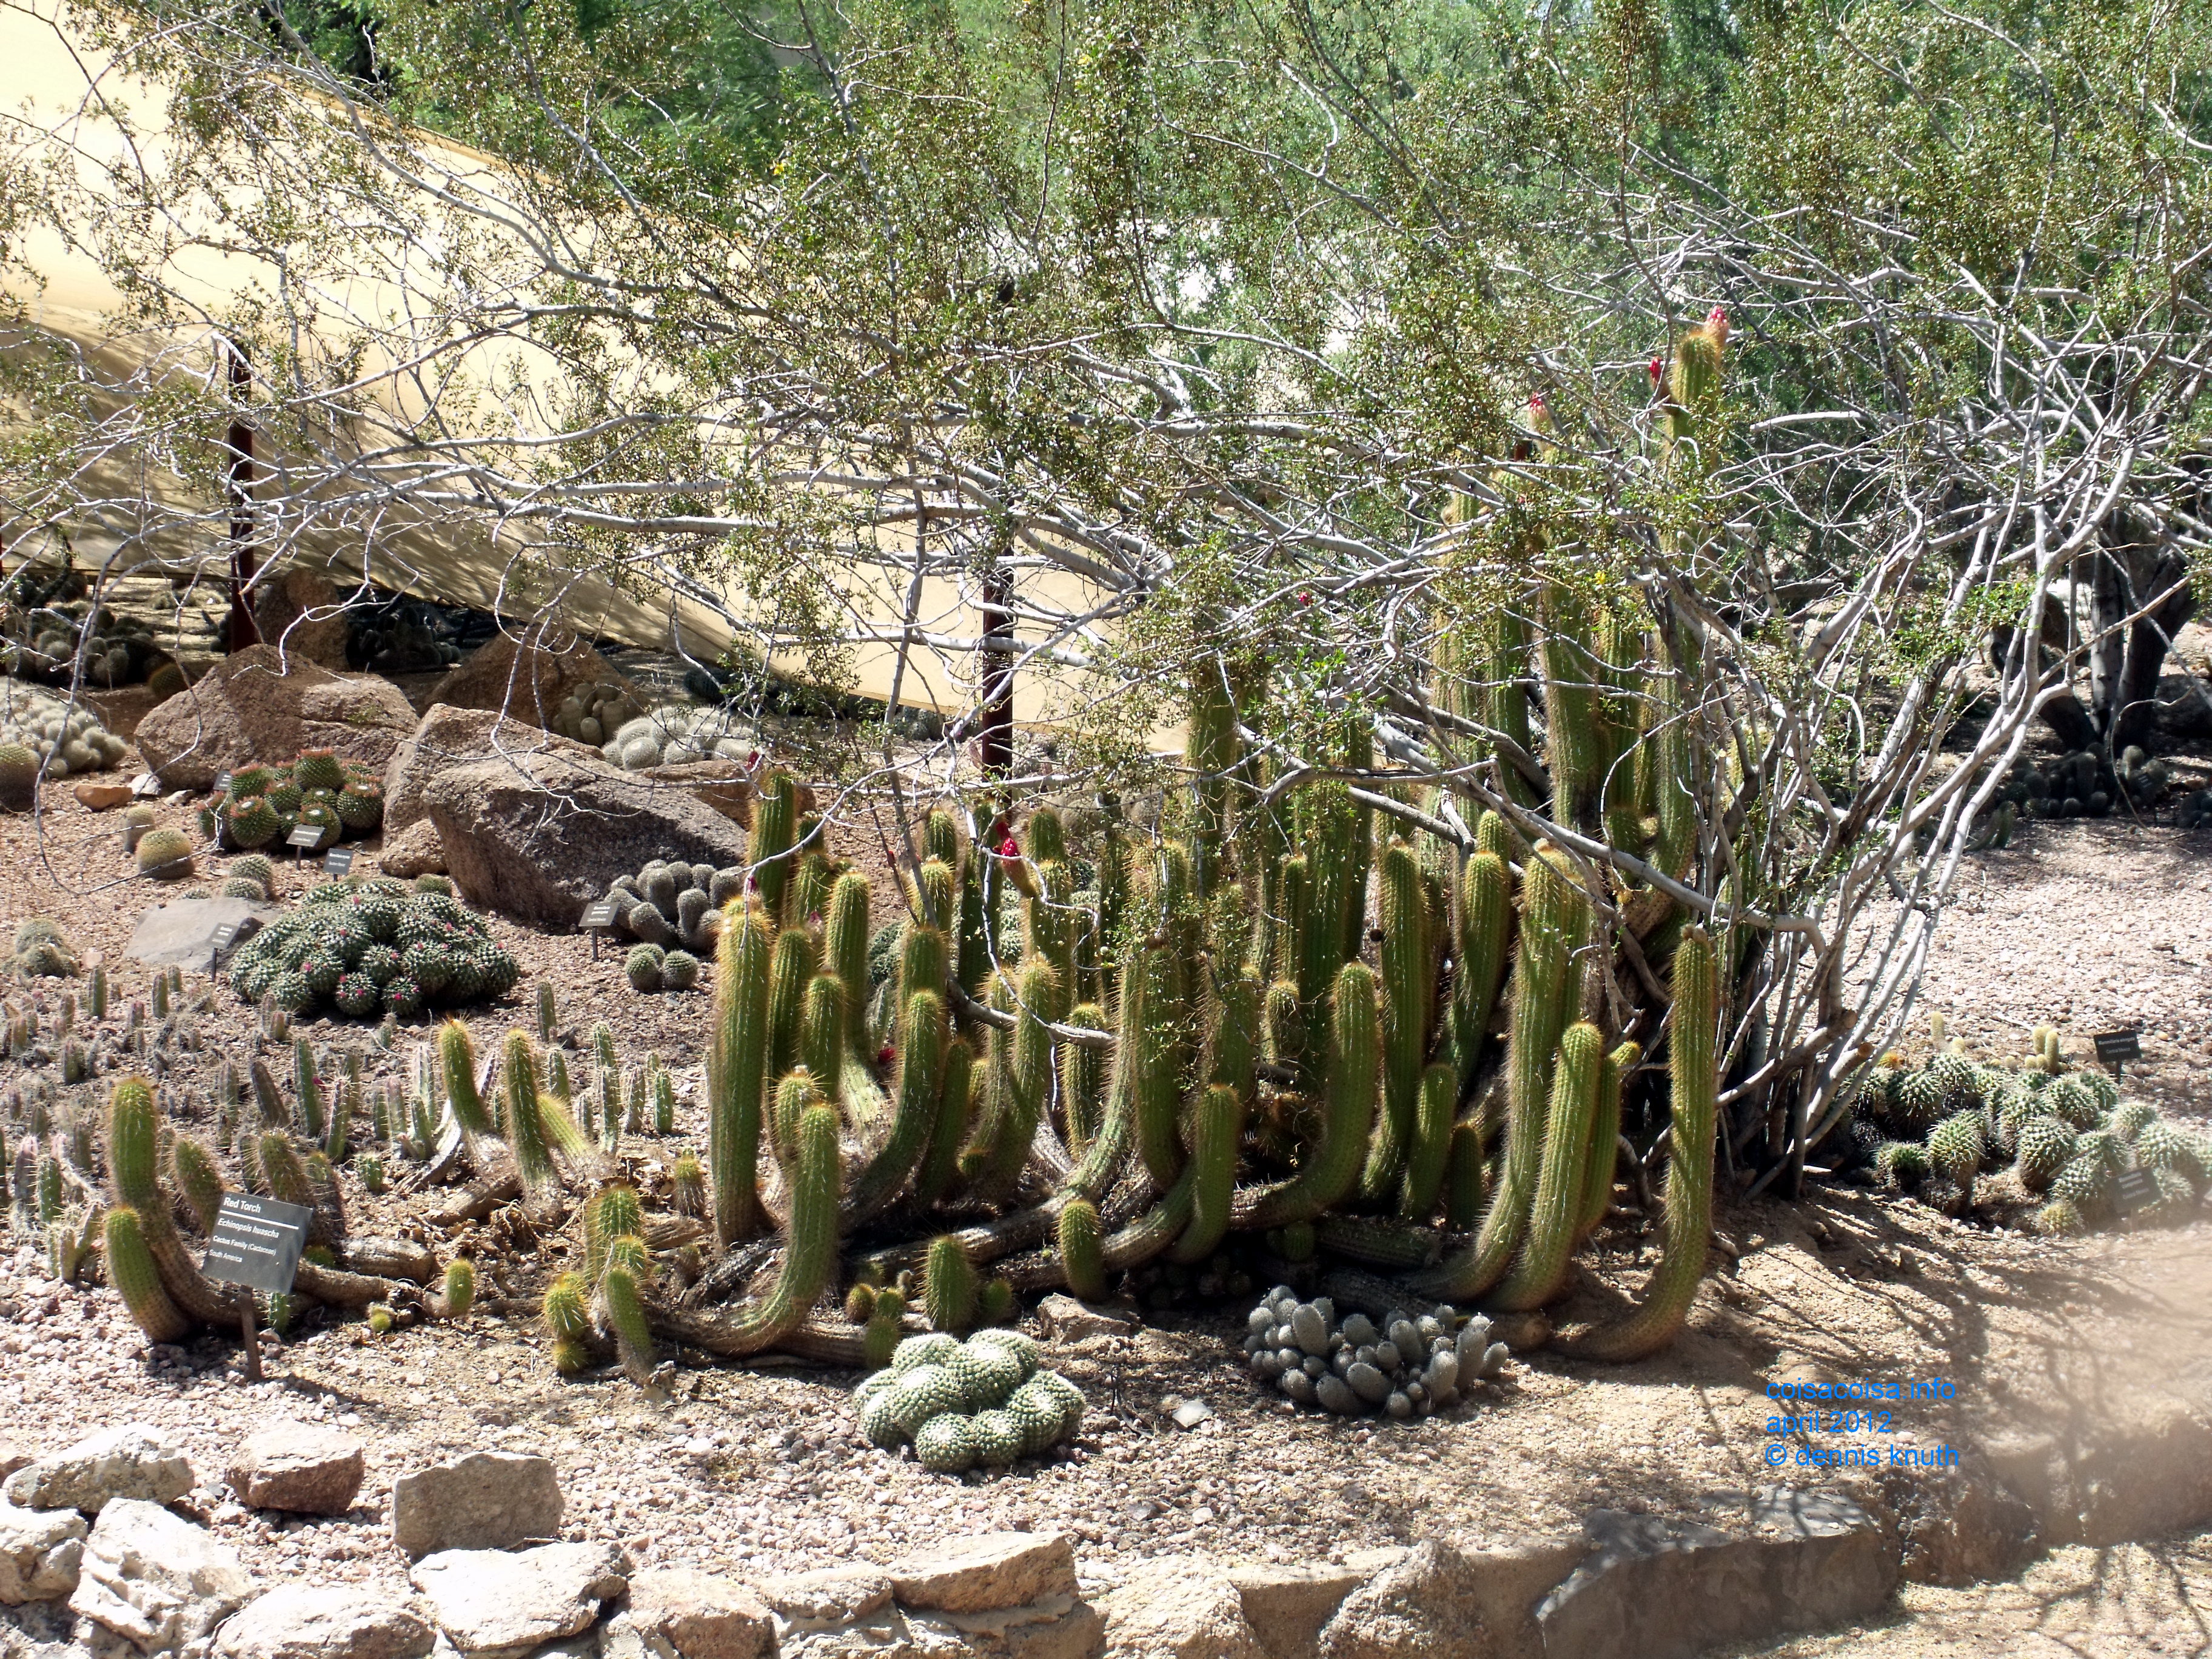 Cactus that creep like snakes